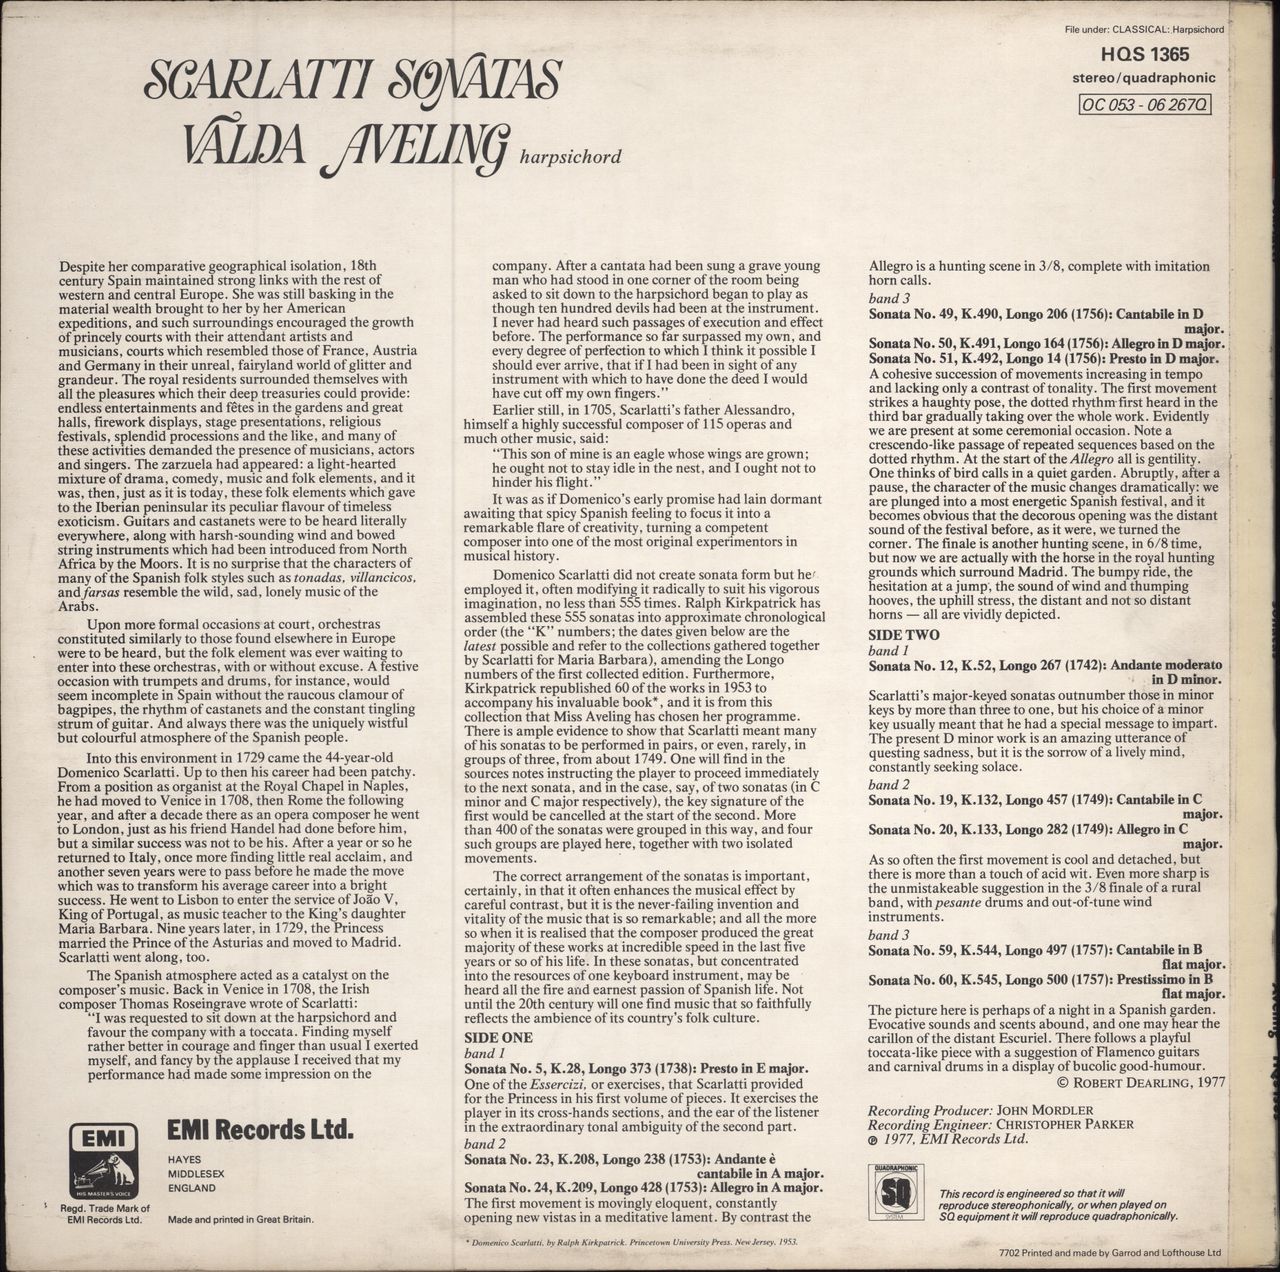 Velda Aveling Valda Aveling Plays Scarlatti Sonatas - Quad UK vinyl LP album (LP record)